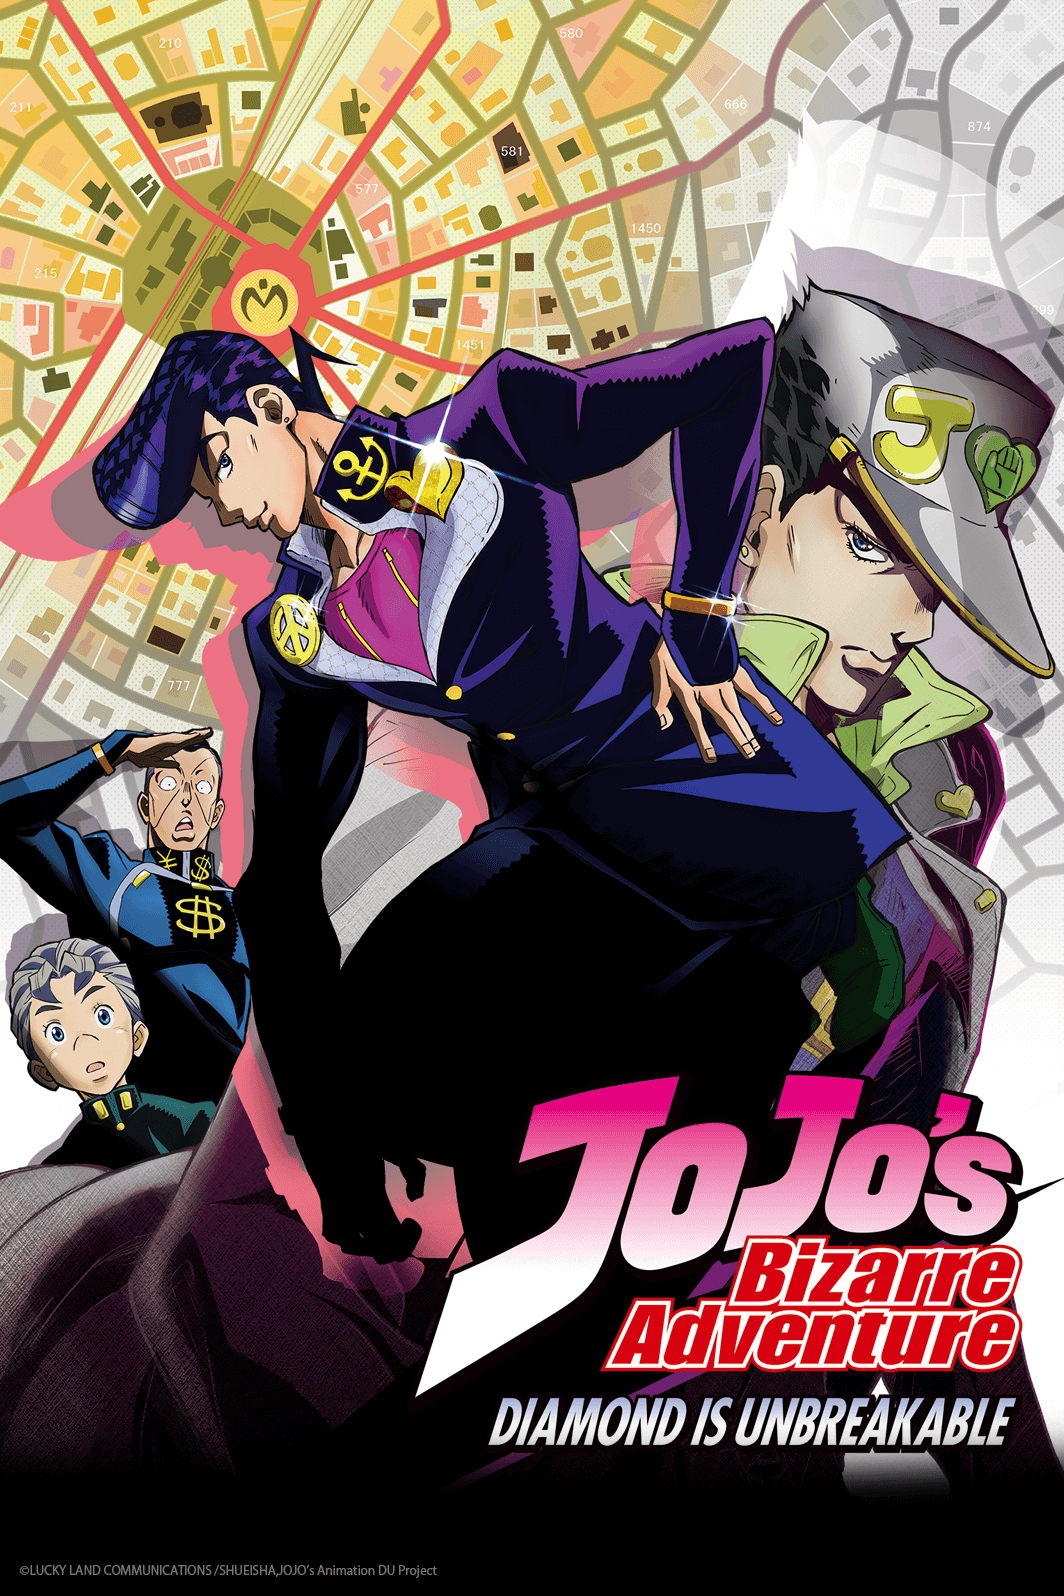 Who is the real protagonist in Jojo Part 4, Koichi or Josuke? - Quora